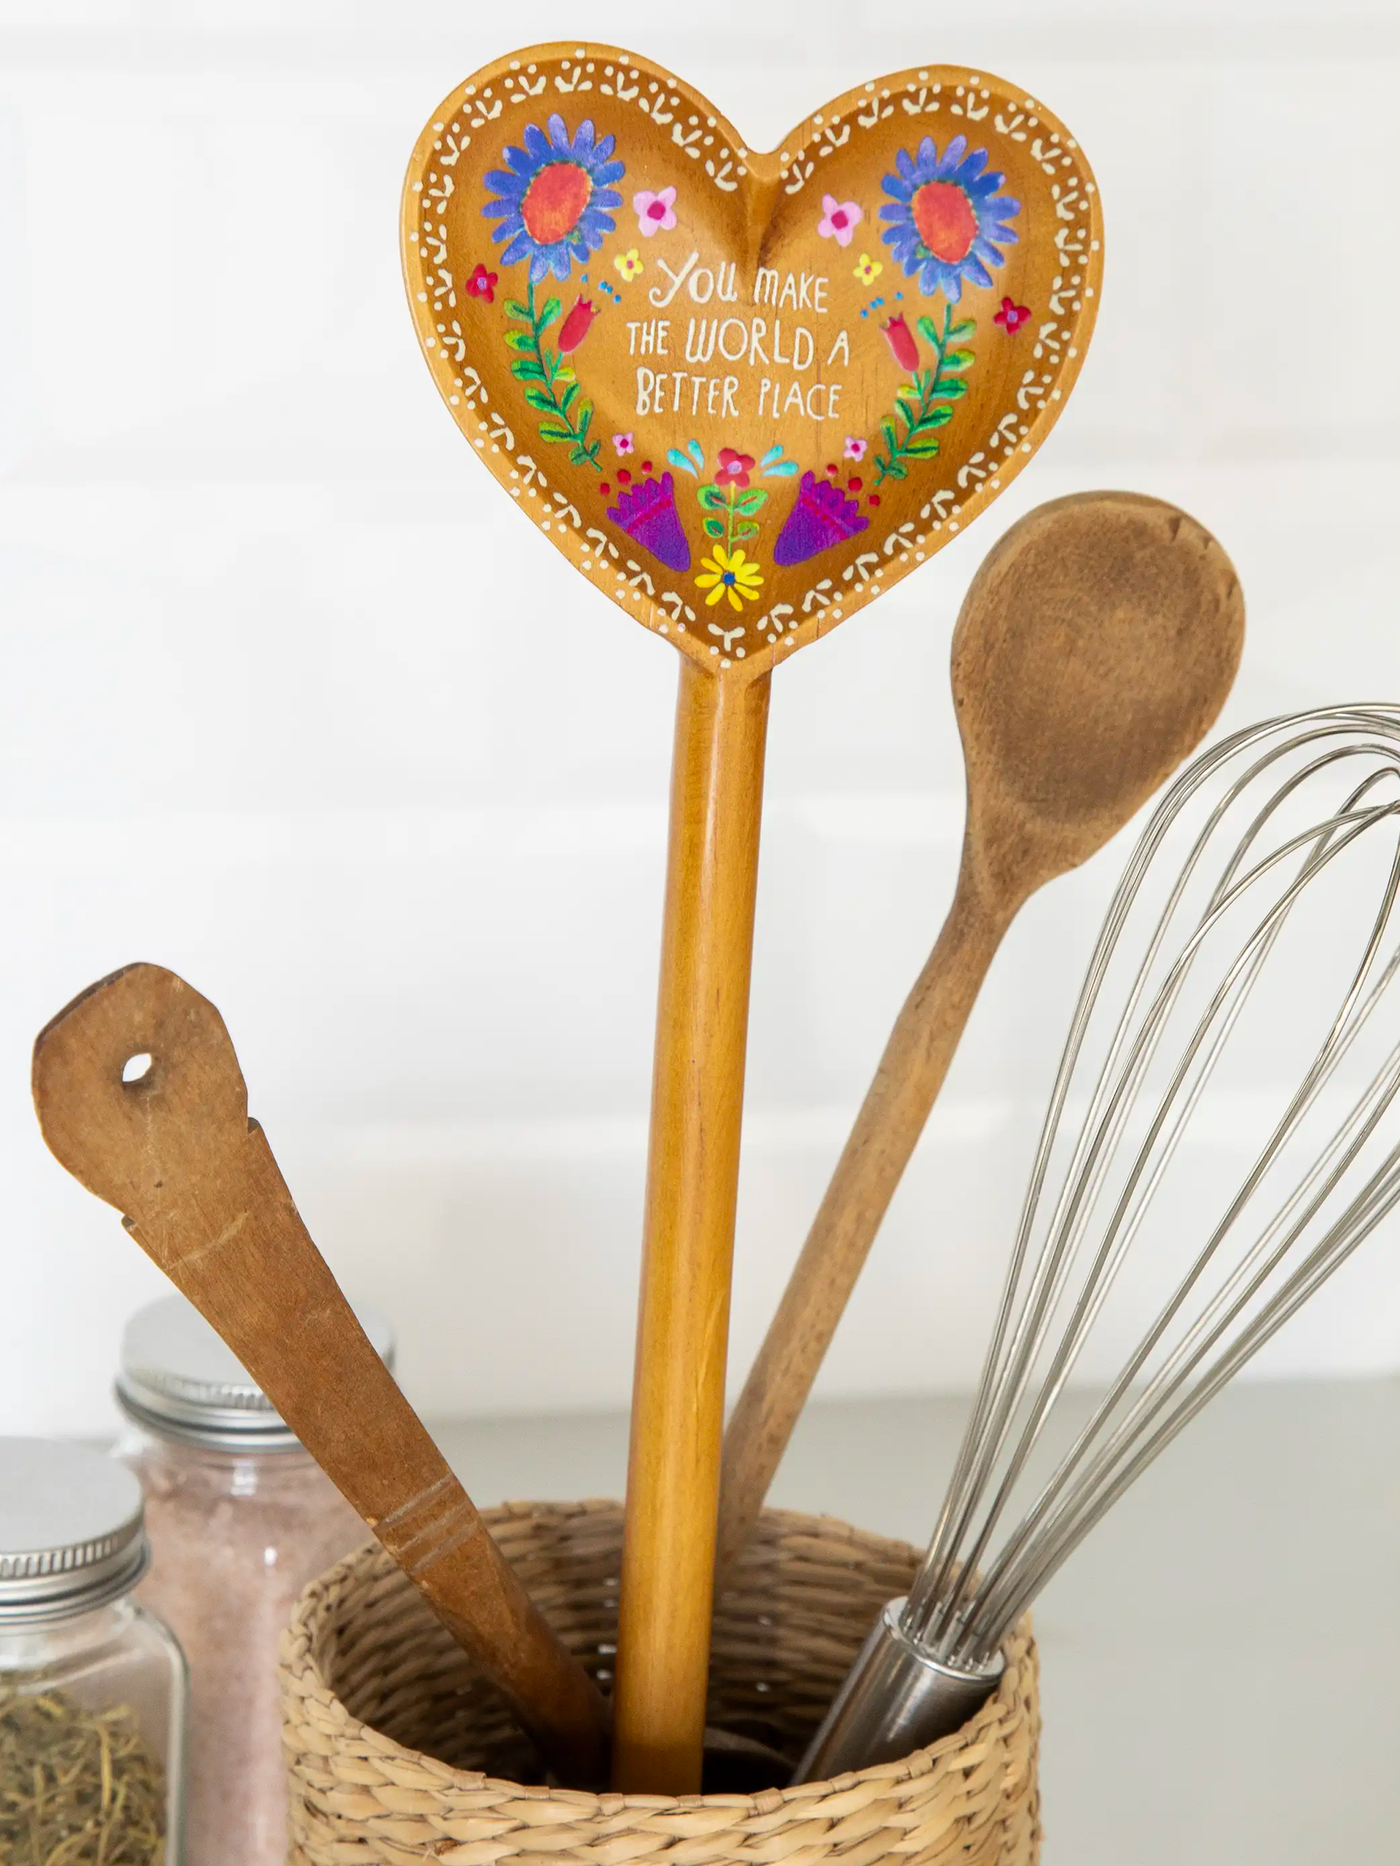 Cutest Wooden Spoon Ever - World Better